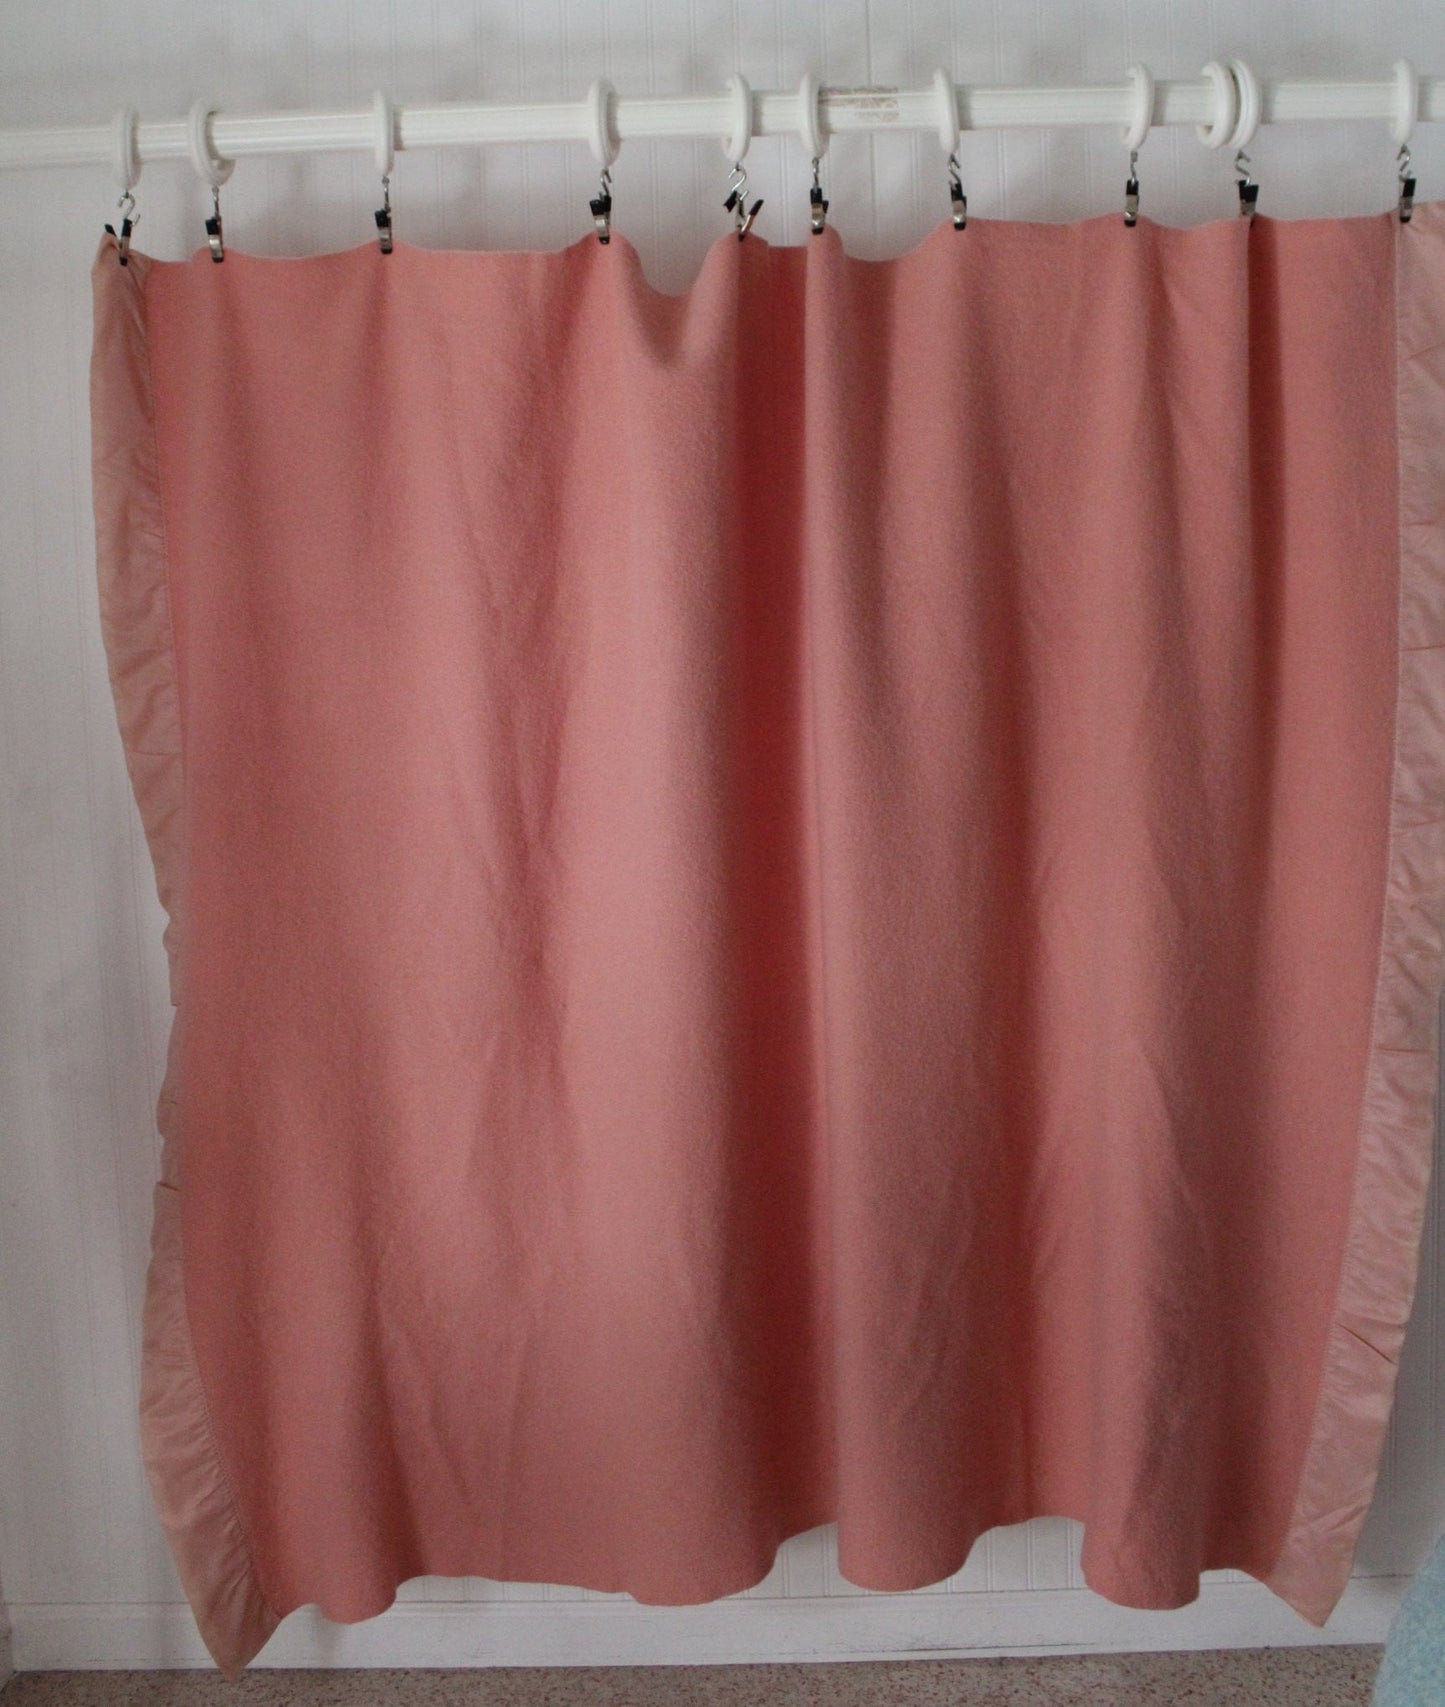 St Marys Ohio Wool Blanket Pink Pale Rose Vintage mid century